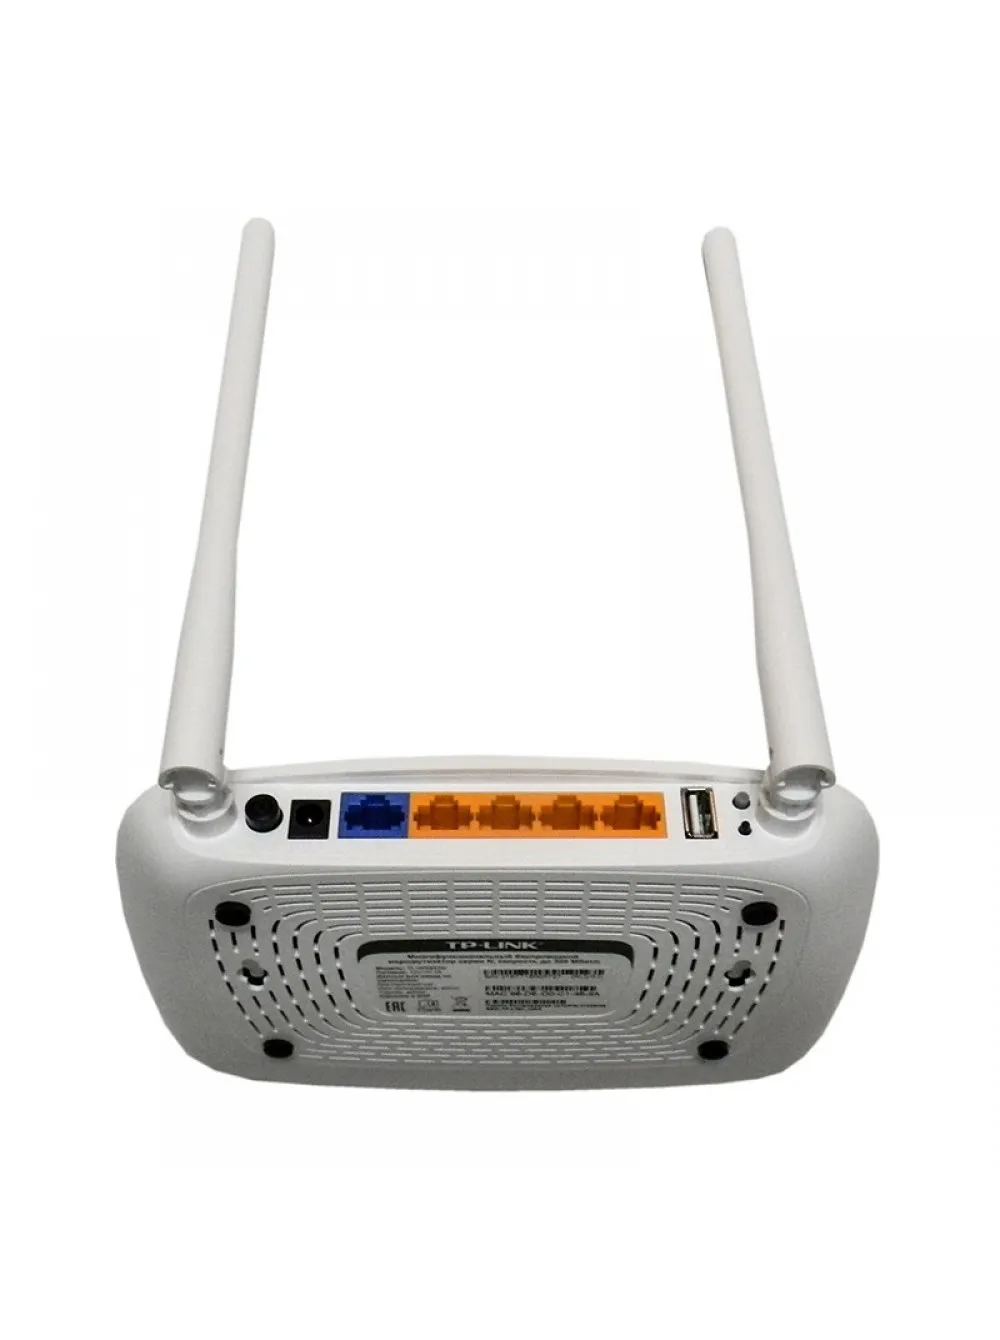 WiFi роутер TL-WR842N 300M Multi-function Wireless N Router, Qualcomm, 2T2R, 2.4GHz, 802.11b/g/n, 1 10/100M WAN + 4 10/100M LAN, 1 USB 2.0 port, 2 fixed antennas#3